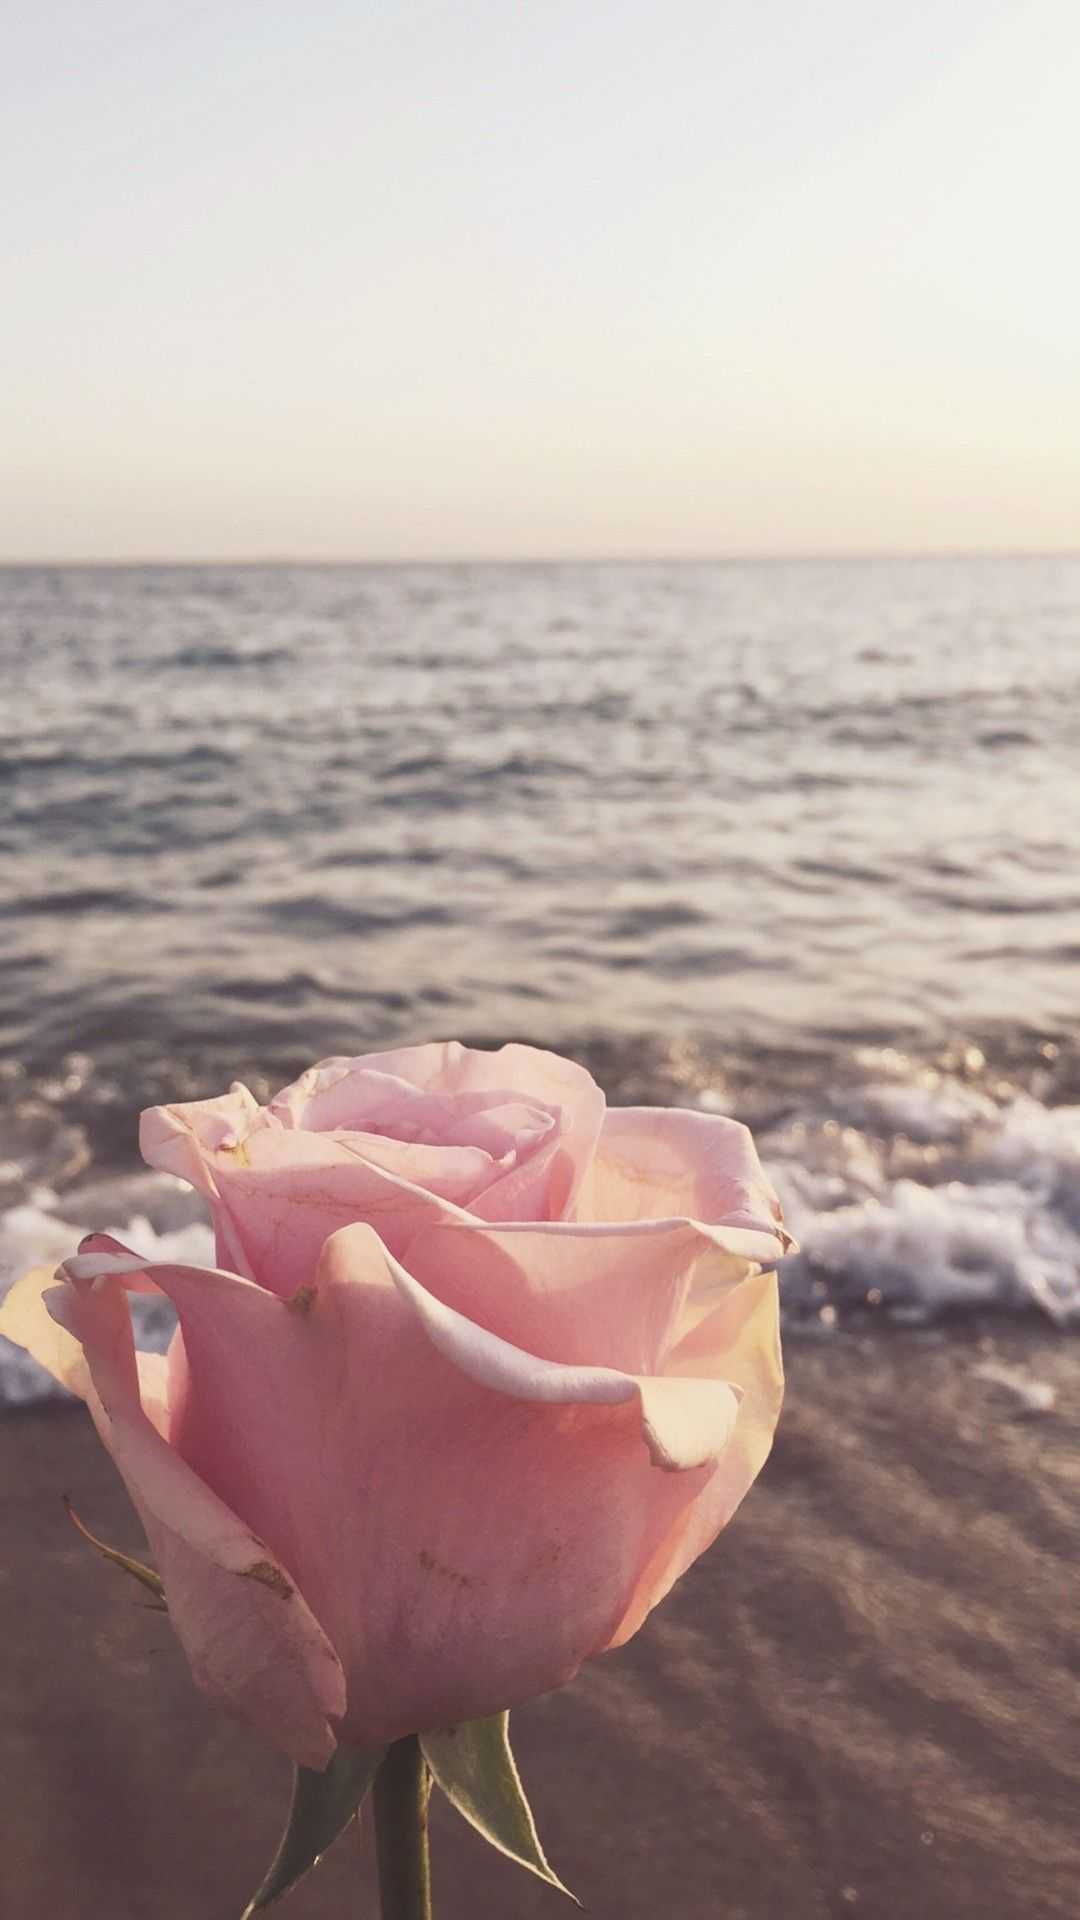 A beautiful pink rose on the beach - Garden